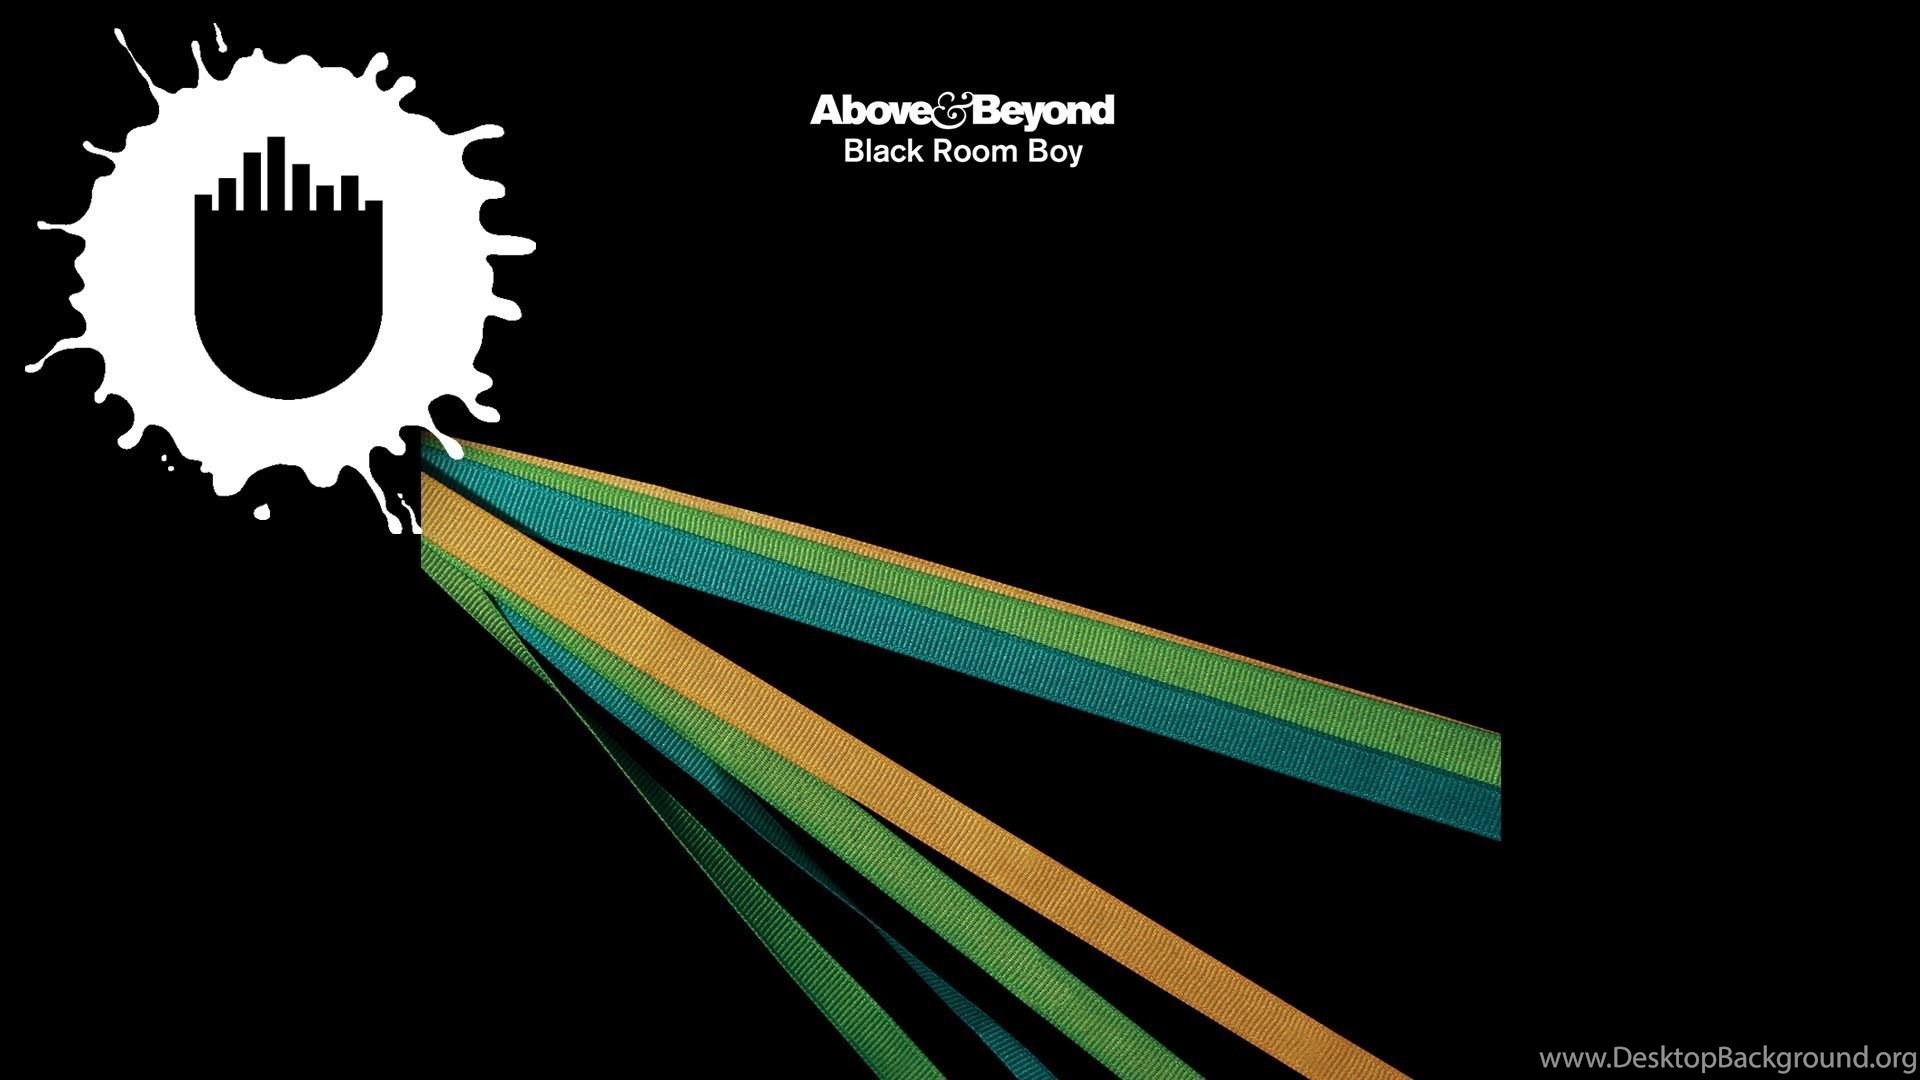 Download Above & Beyond Black Room Boy (Above & Beyond Club Edit) (...